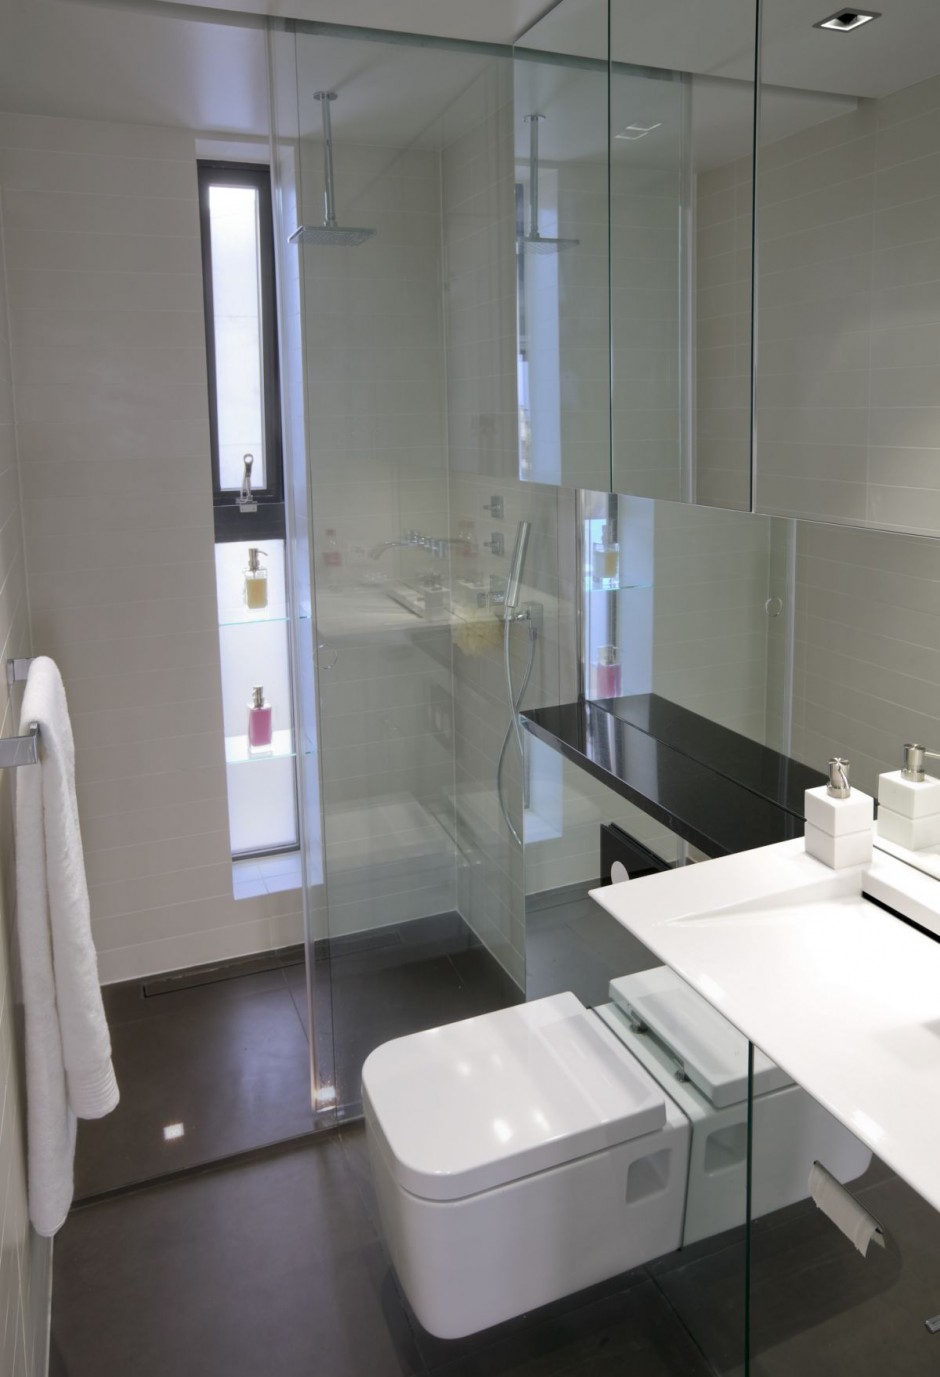 Modern Bathroom Designs Pictures